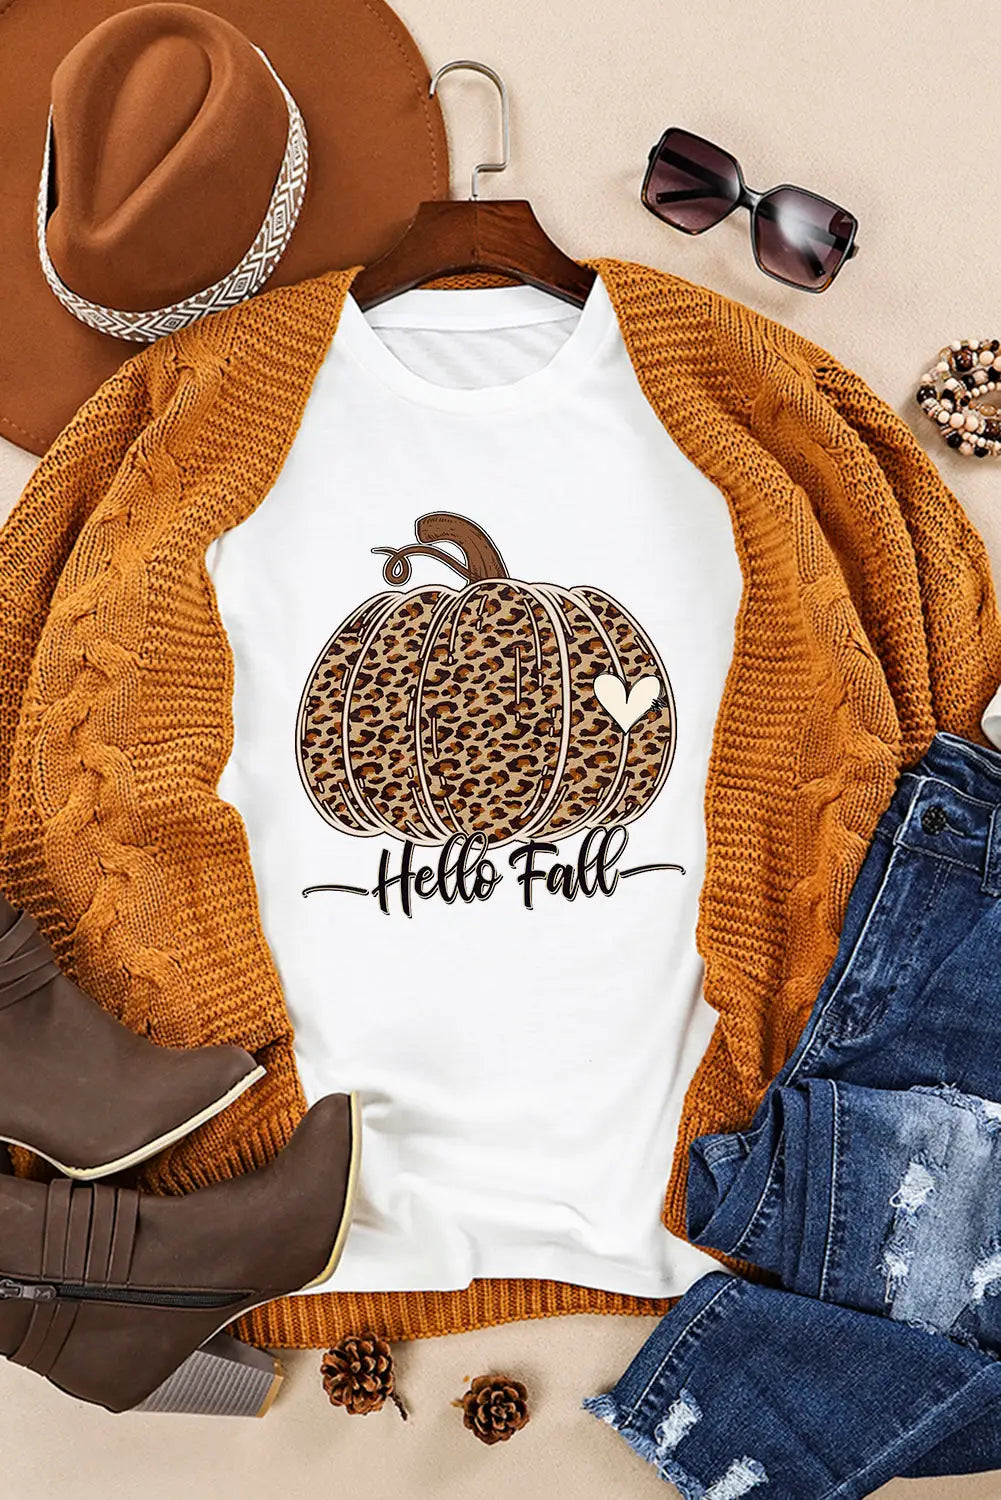 Khaki flannels hayrides pumpkins sweaters bonfires tee - graphic t-shirts